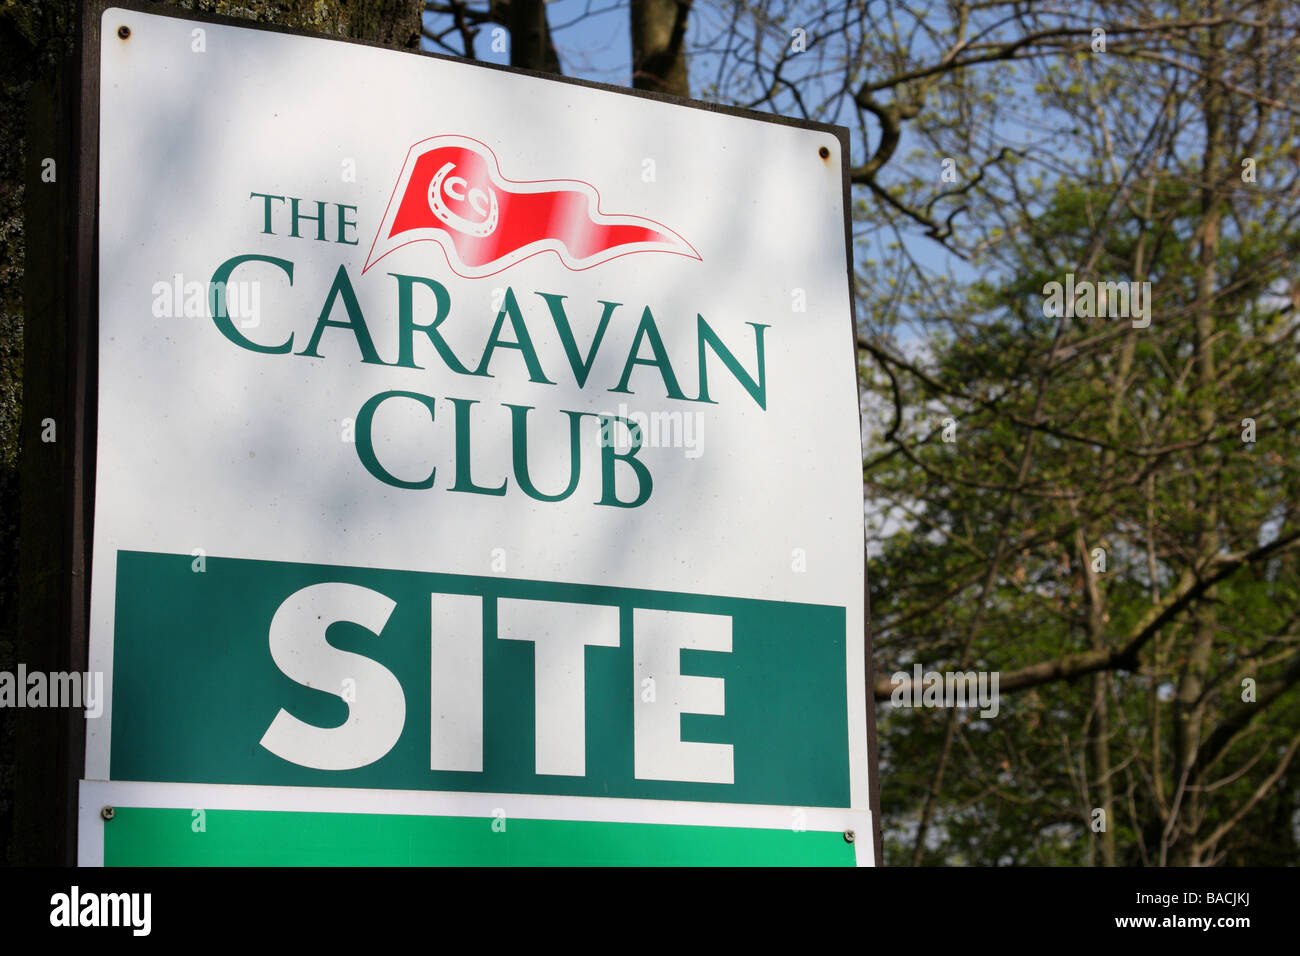 A Caravan Club sign at a caravan site in the U.K. Stock Photo